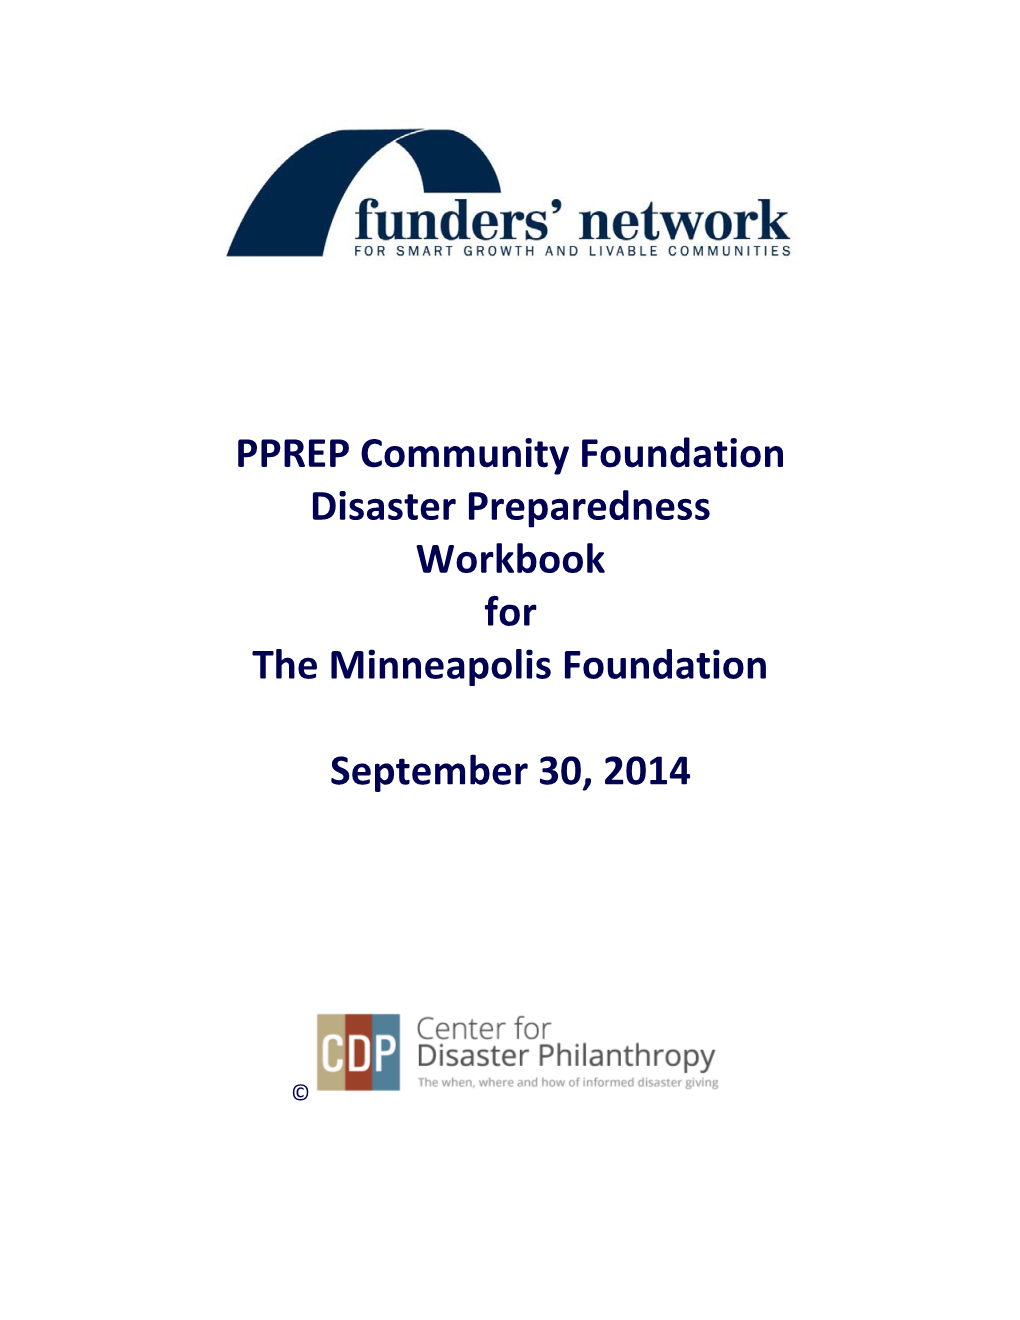 PPREP Community Foundation Disaster Preparedness Workbook for the Minneapolis Foundation